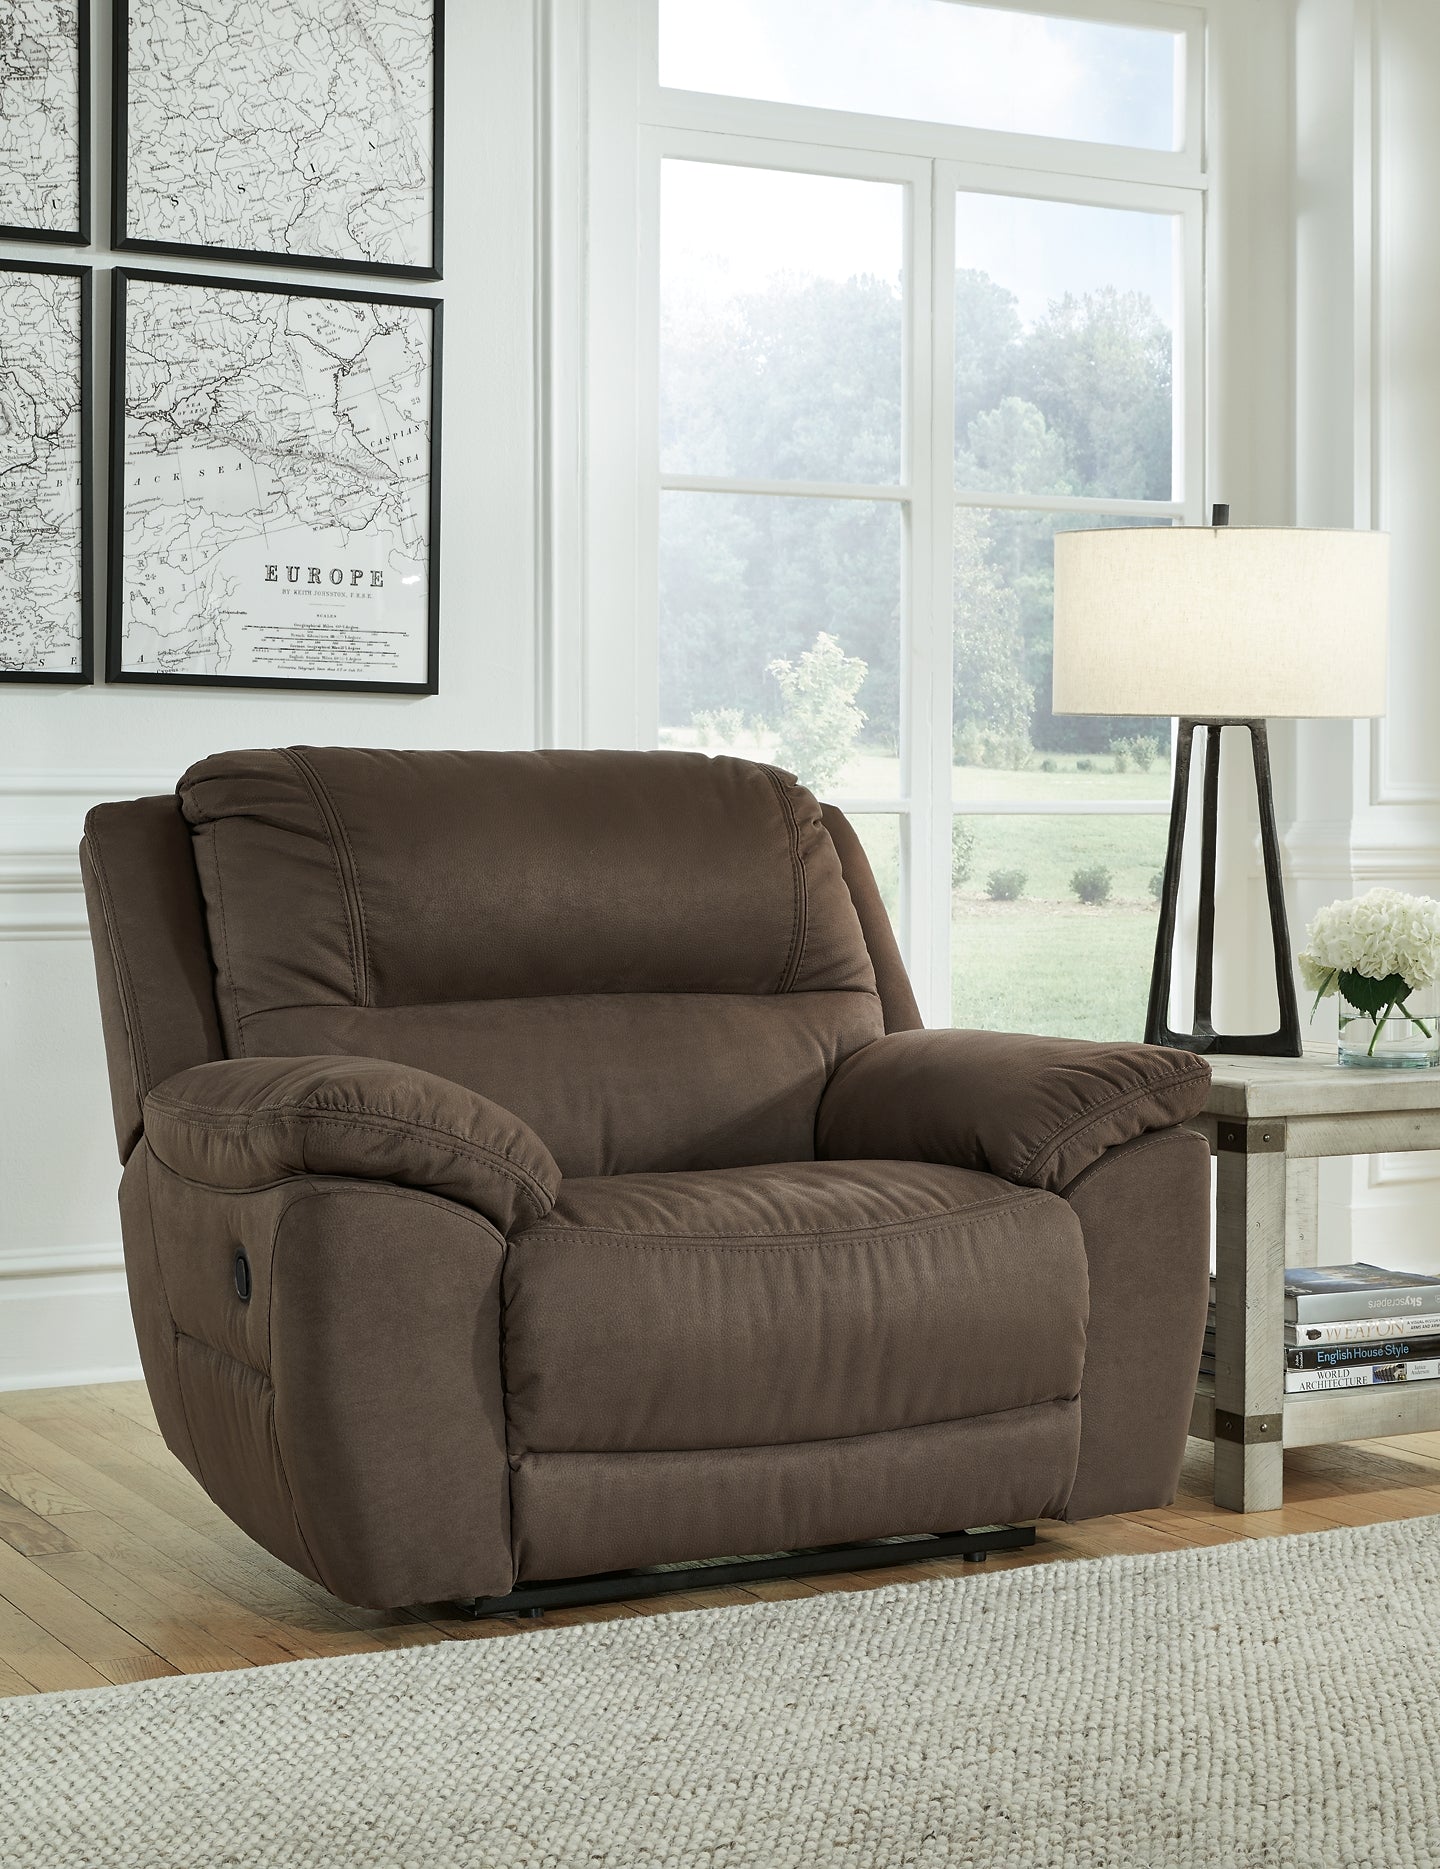 Next-Gen Gaucho Zero Wall Wide Seat Recliner JB's Furniture  Home Furniture, Home Decor, Furniture Store